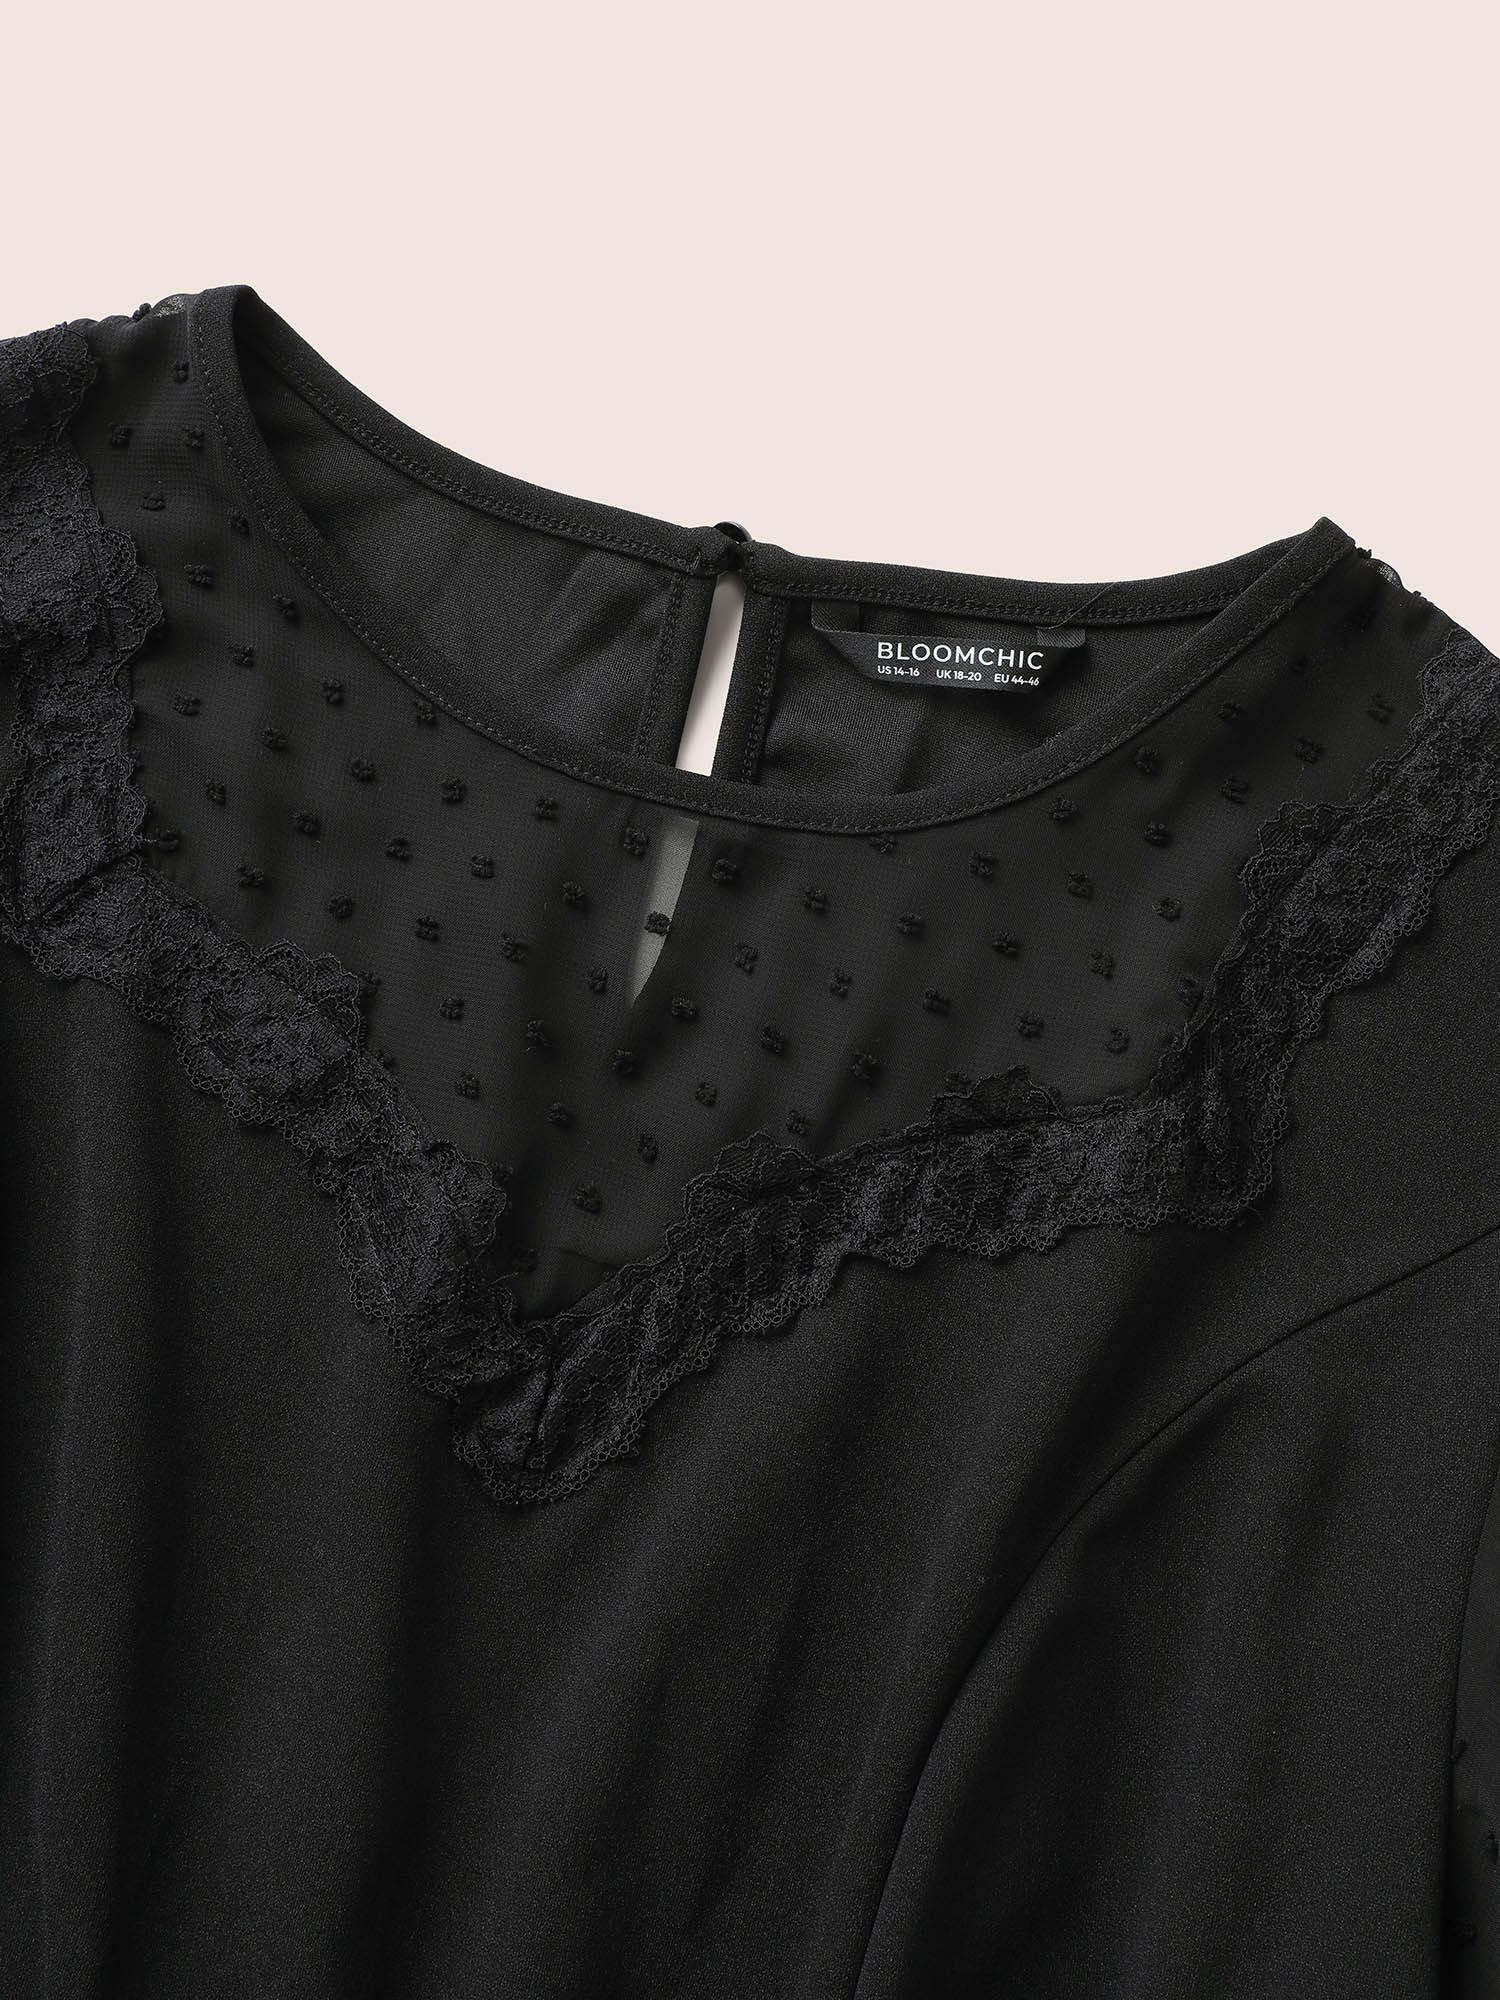 

Plus Size Black Solid Chiffon Crochet Lace Mesh Blouse Women Elegant Short sleeve Round Neck Everyday Blouses BloomChic